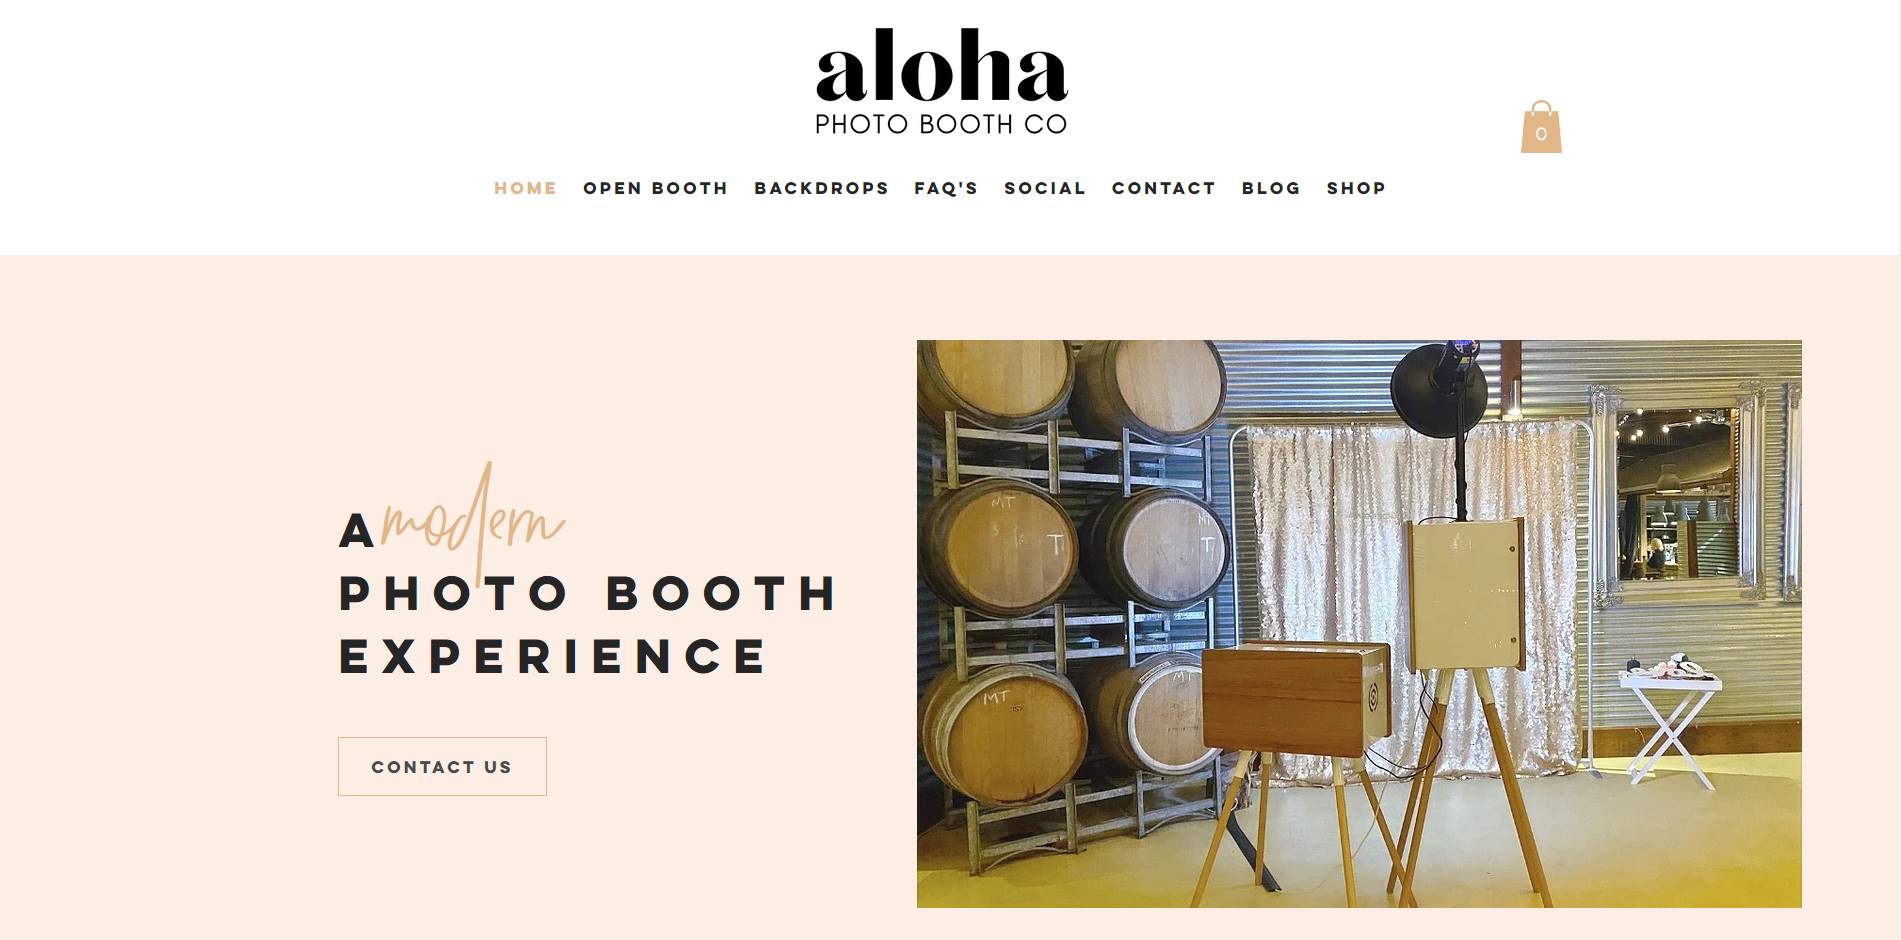 Aloha Photo Booth